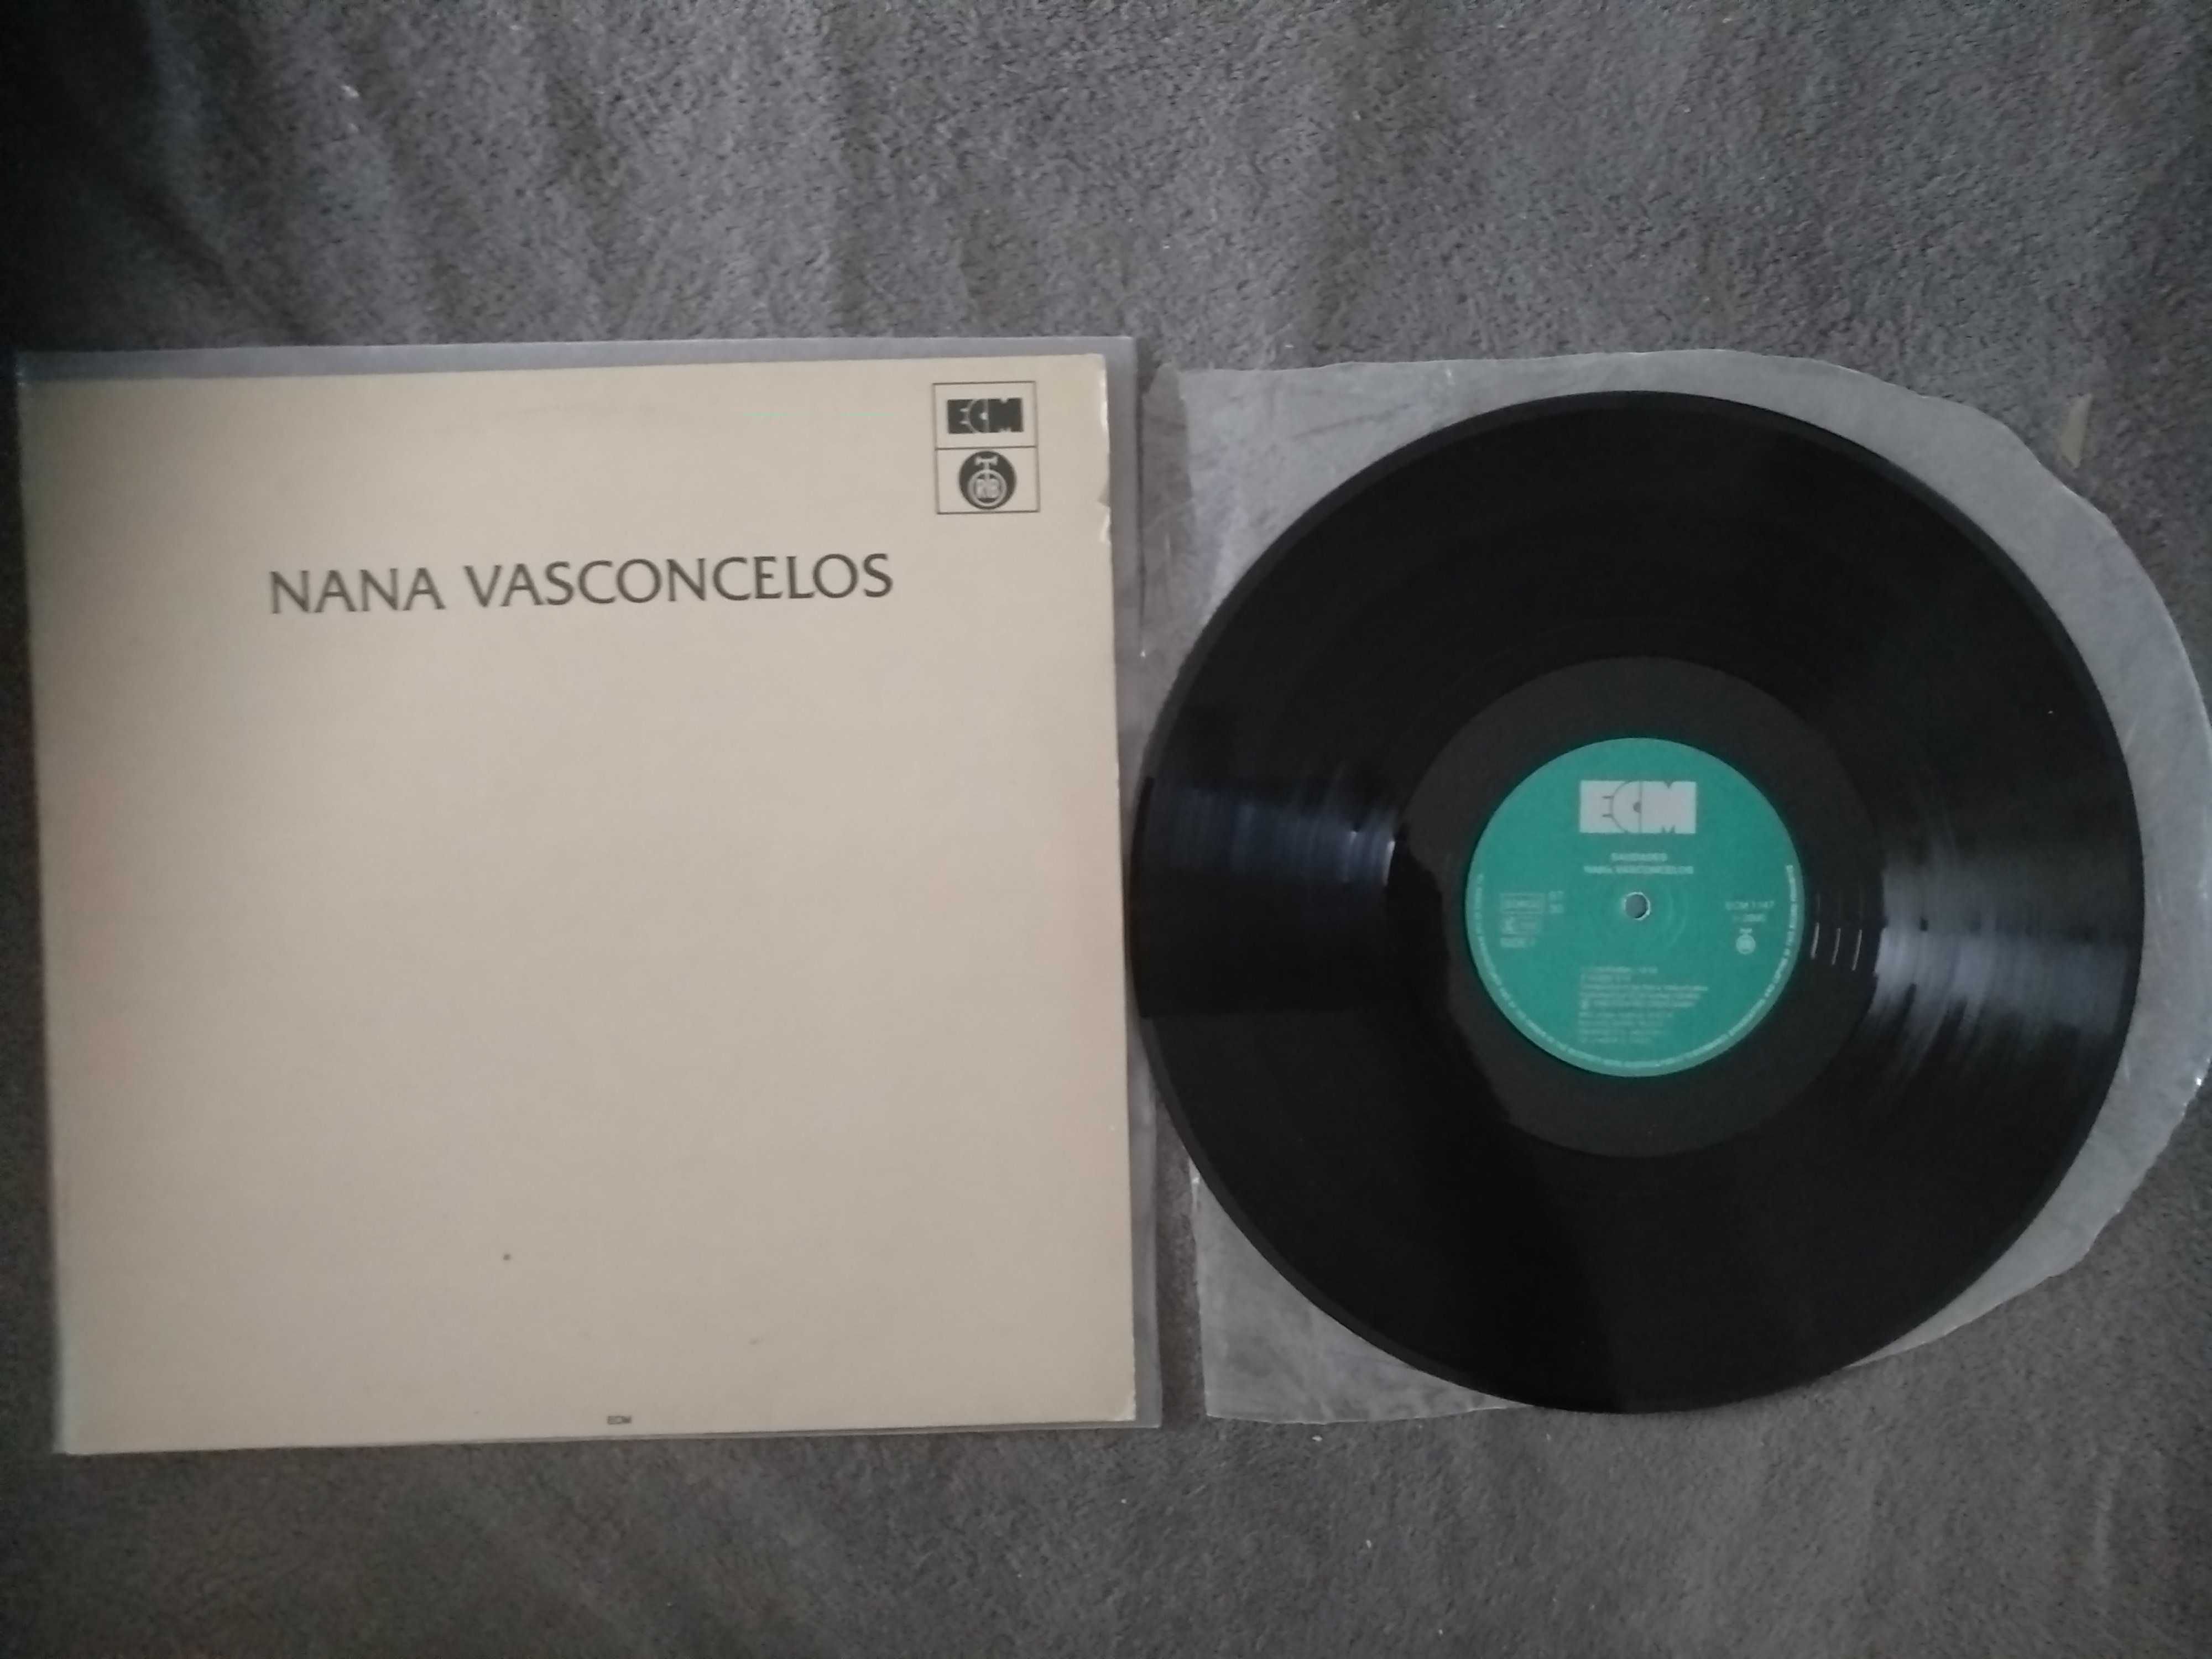 Nana Vasconcelos – Saudades jugoslawia Ecm